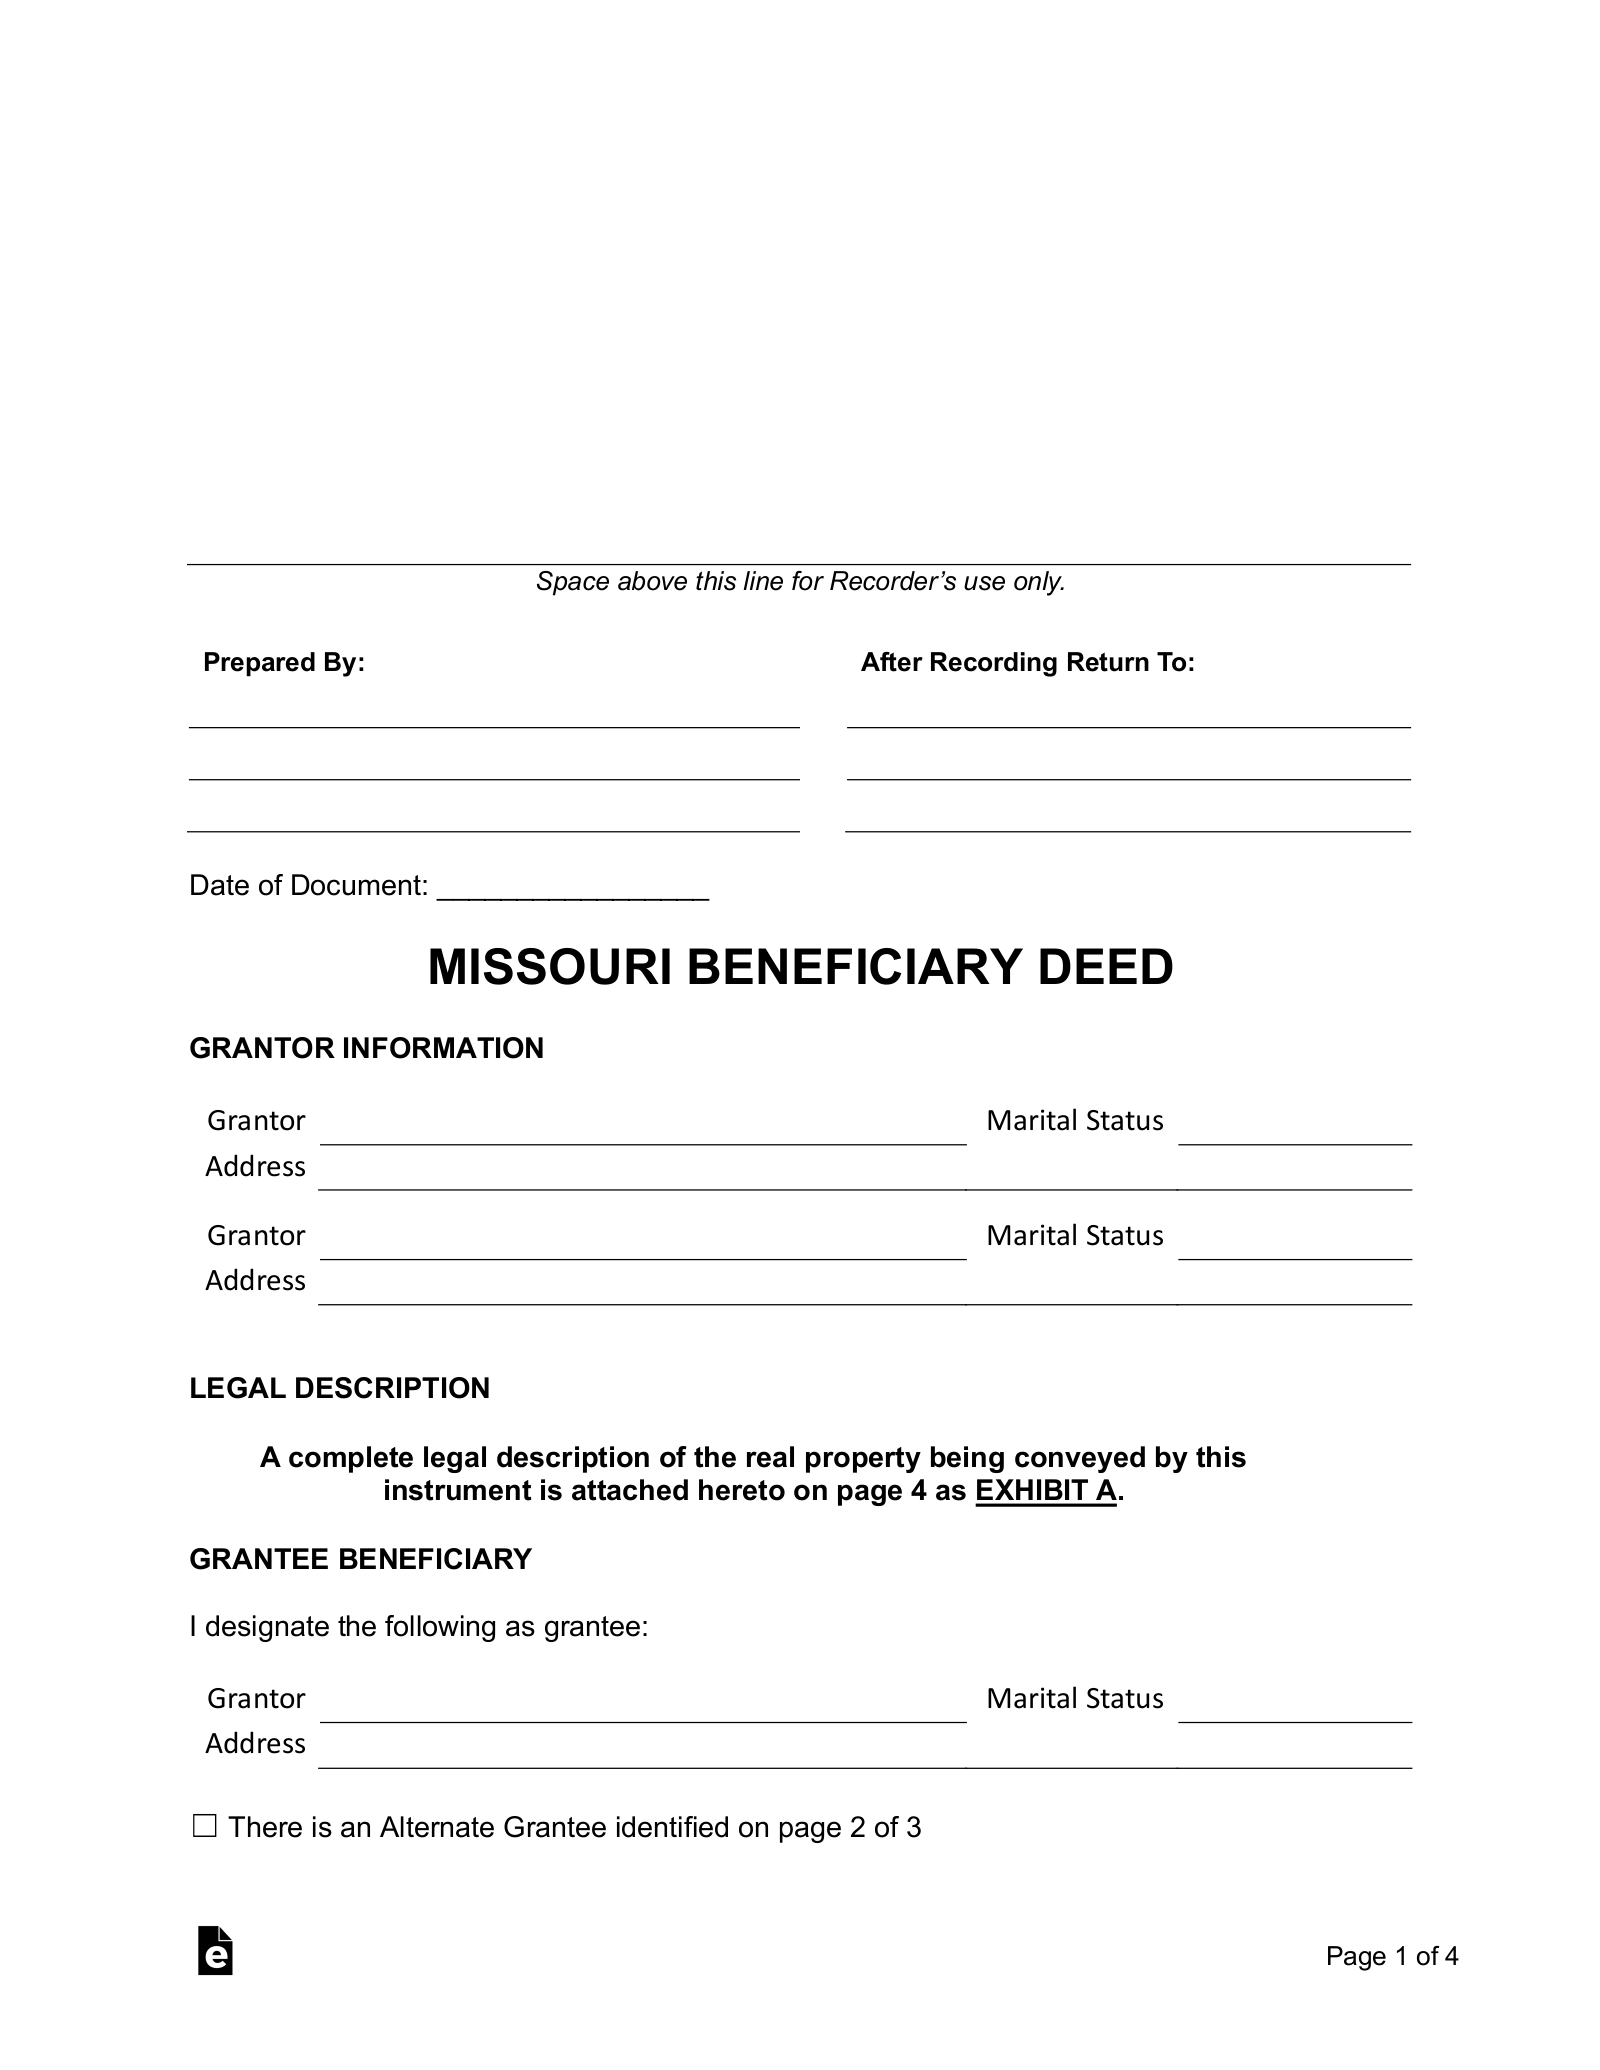 Missouri Beneficiary Deed